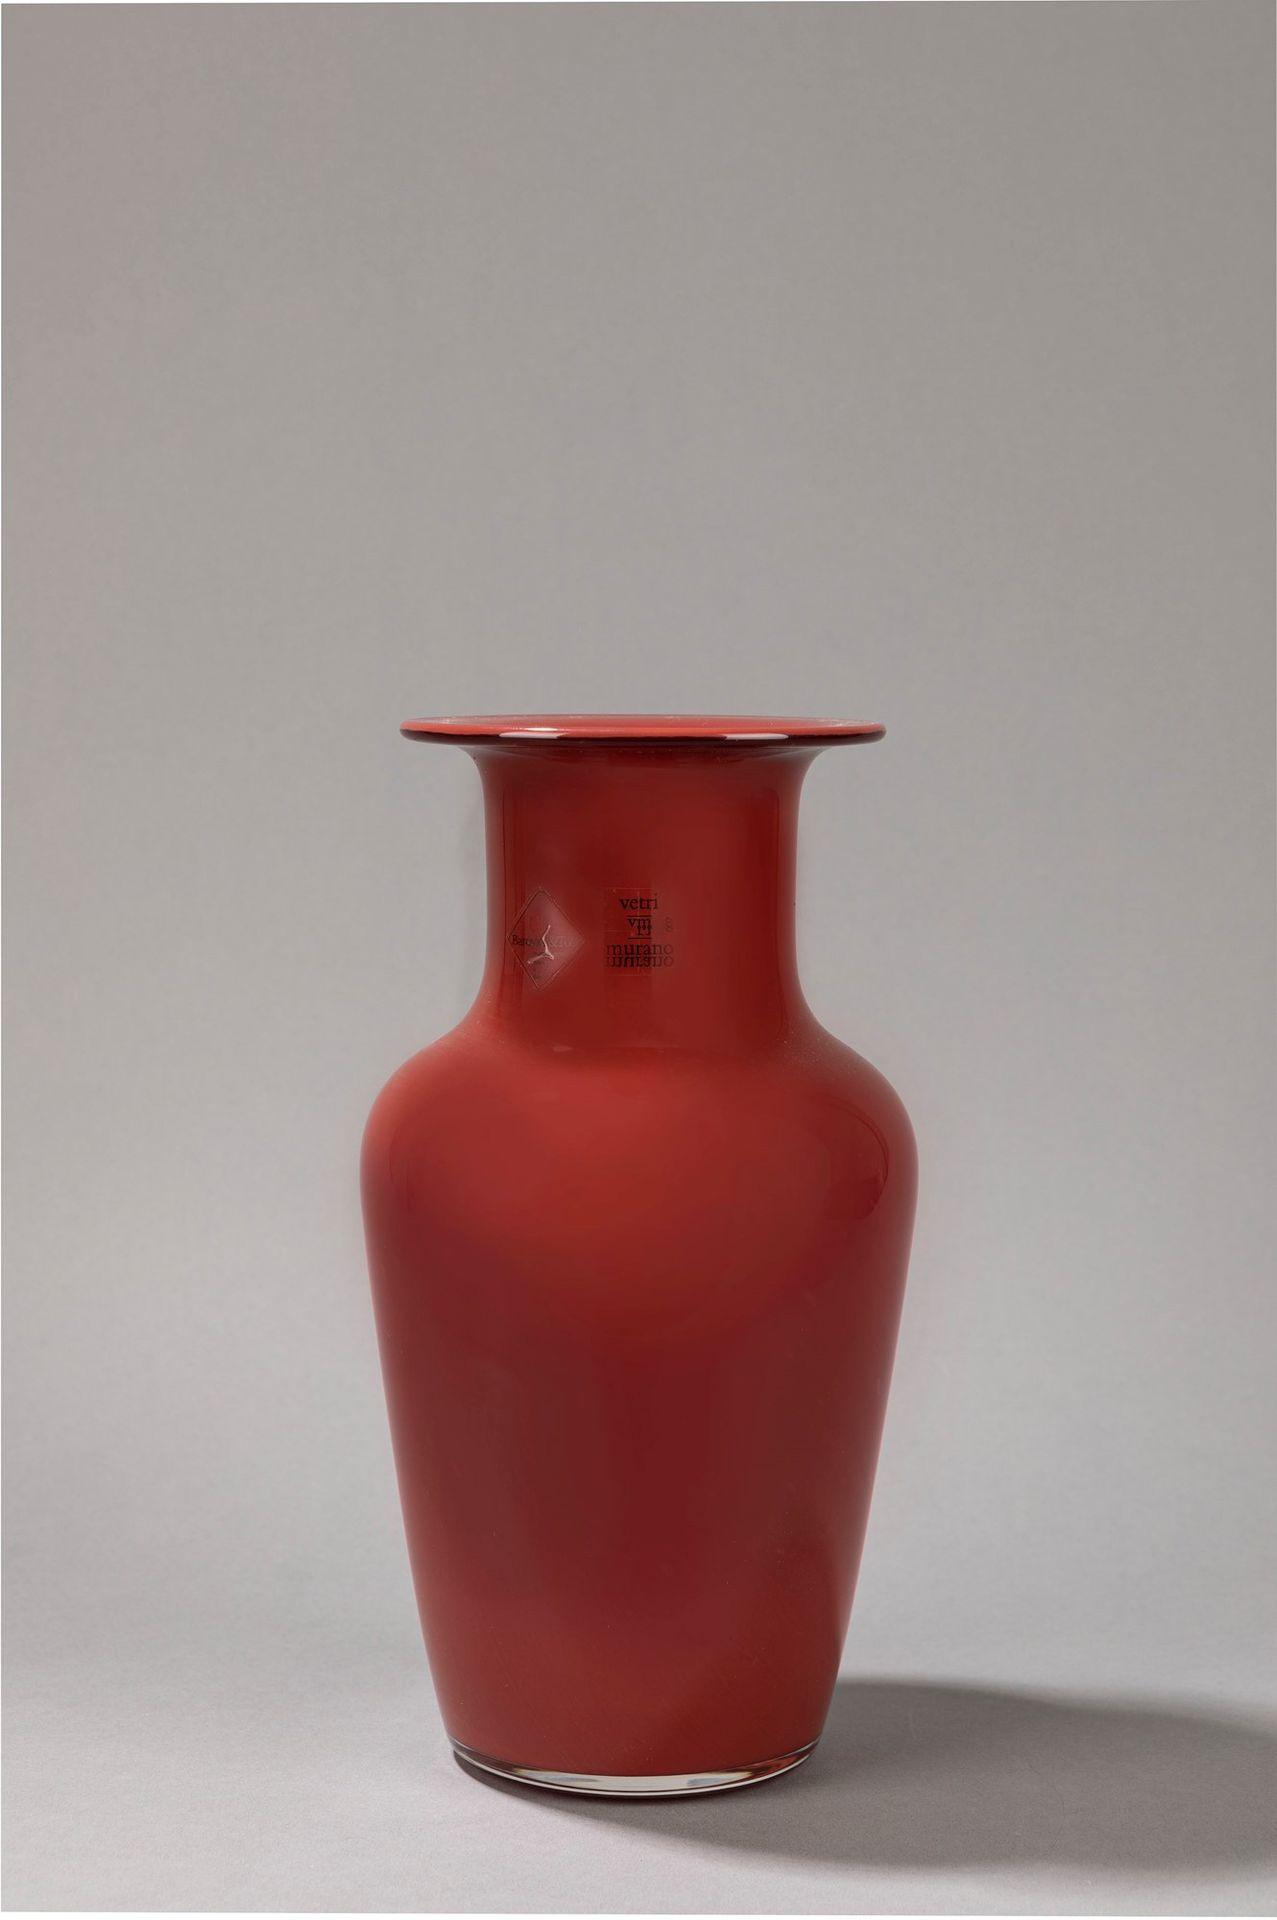 Barovier e Toso Jarrón, 1970 aprox.

H 30 x 20 cm
vidrio soplado rojo.

Etiqueta&hellip;